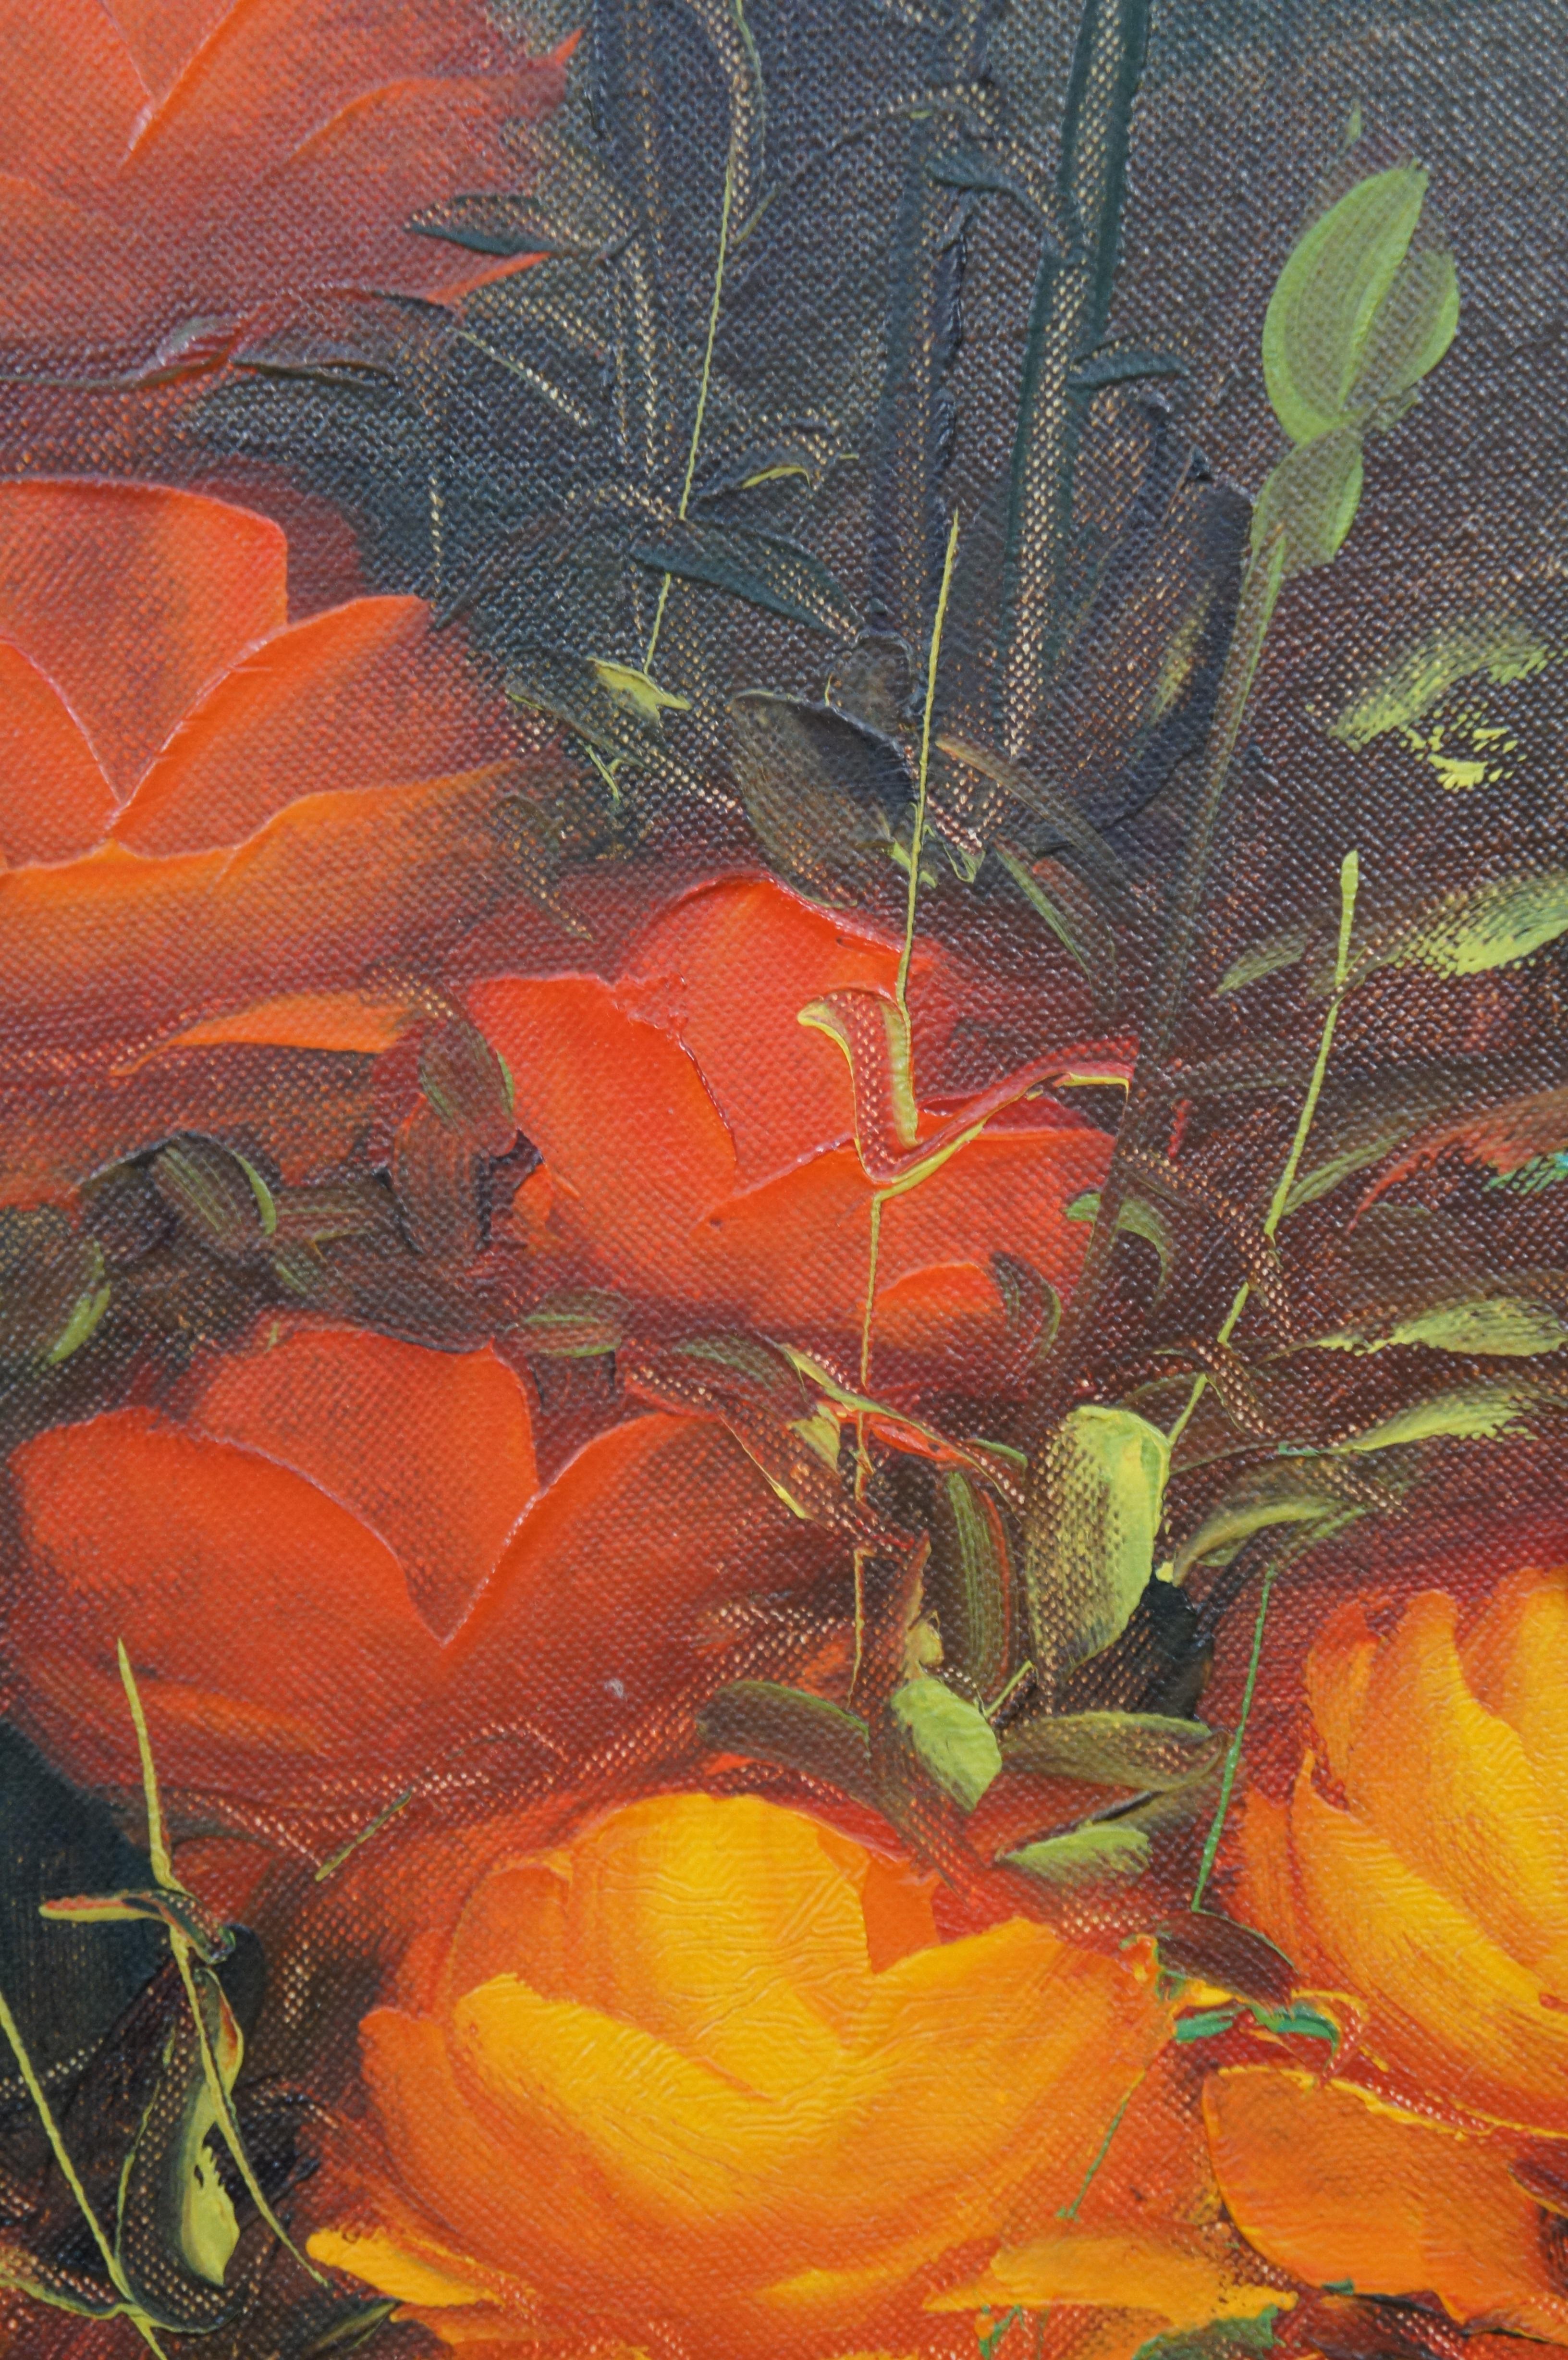 Vintage Suzanne Floral Still Life Oil Painting on Canvas Orange Rose Bouquet For Sale 1